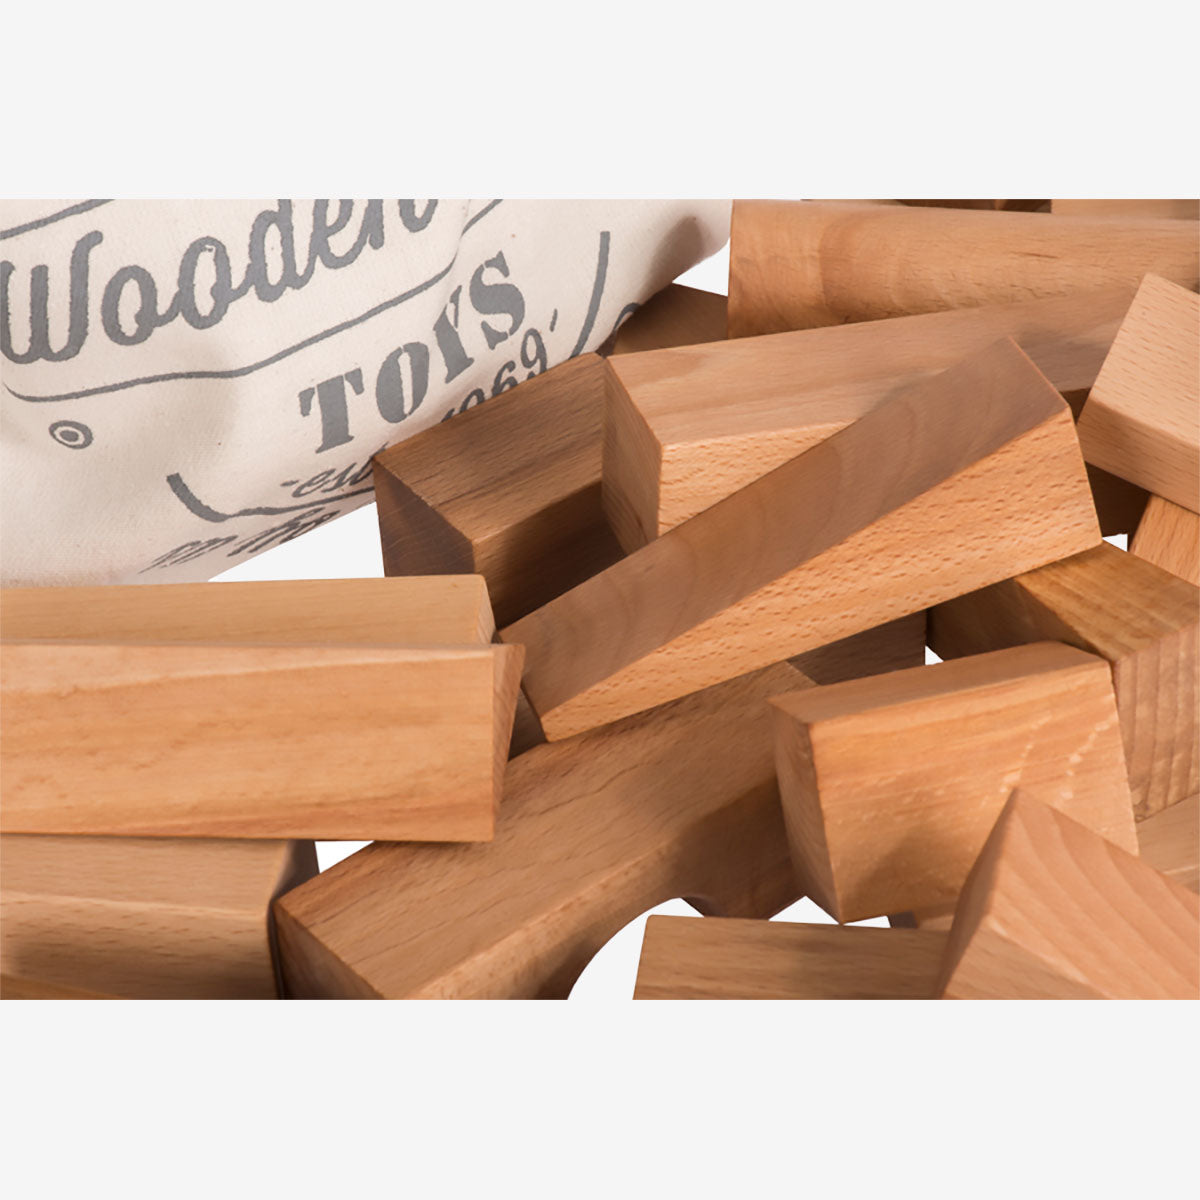 Wooden Story Natural XL Blocks in Sack - 50 pcs